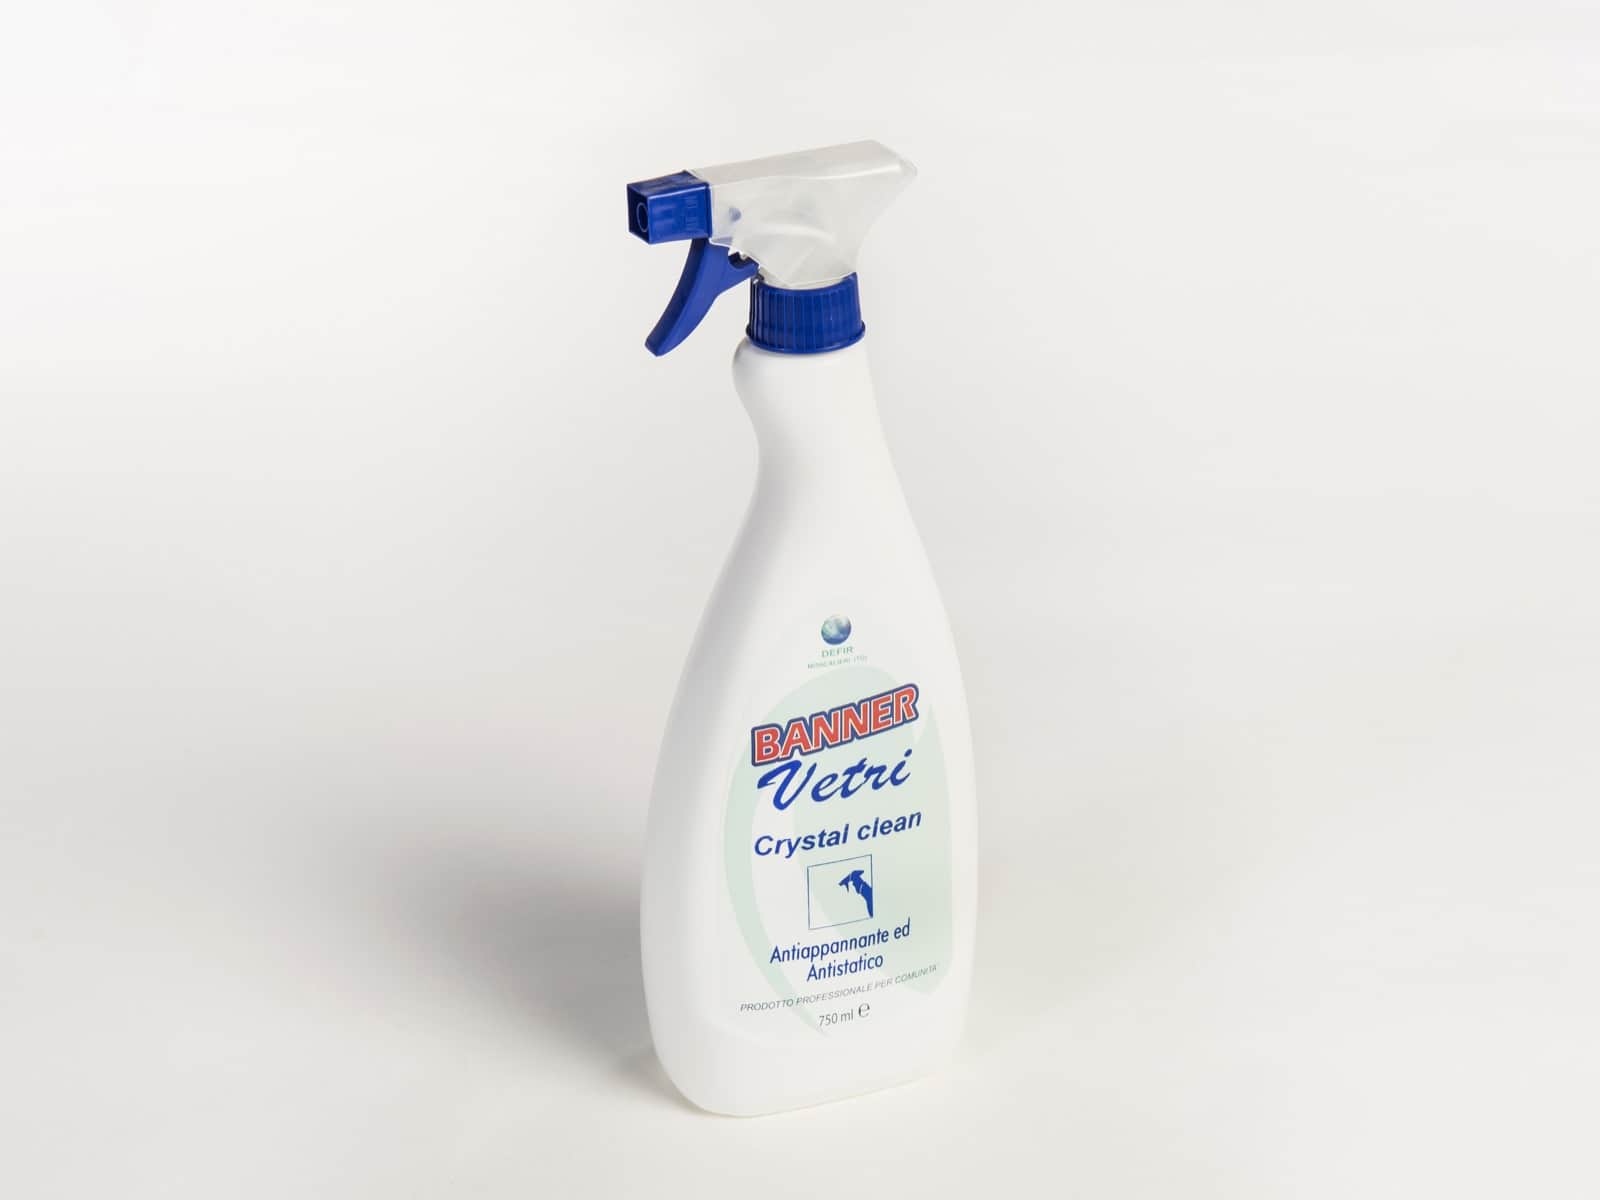 Banner Vetri Spray - Detergente multiuso sgrassante per superfici dure